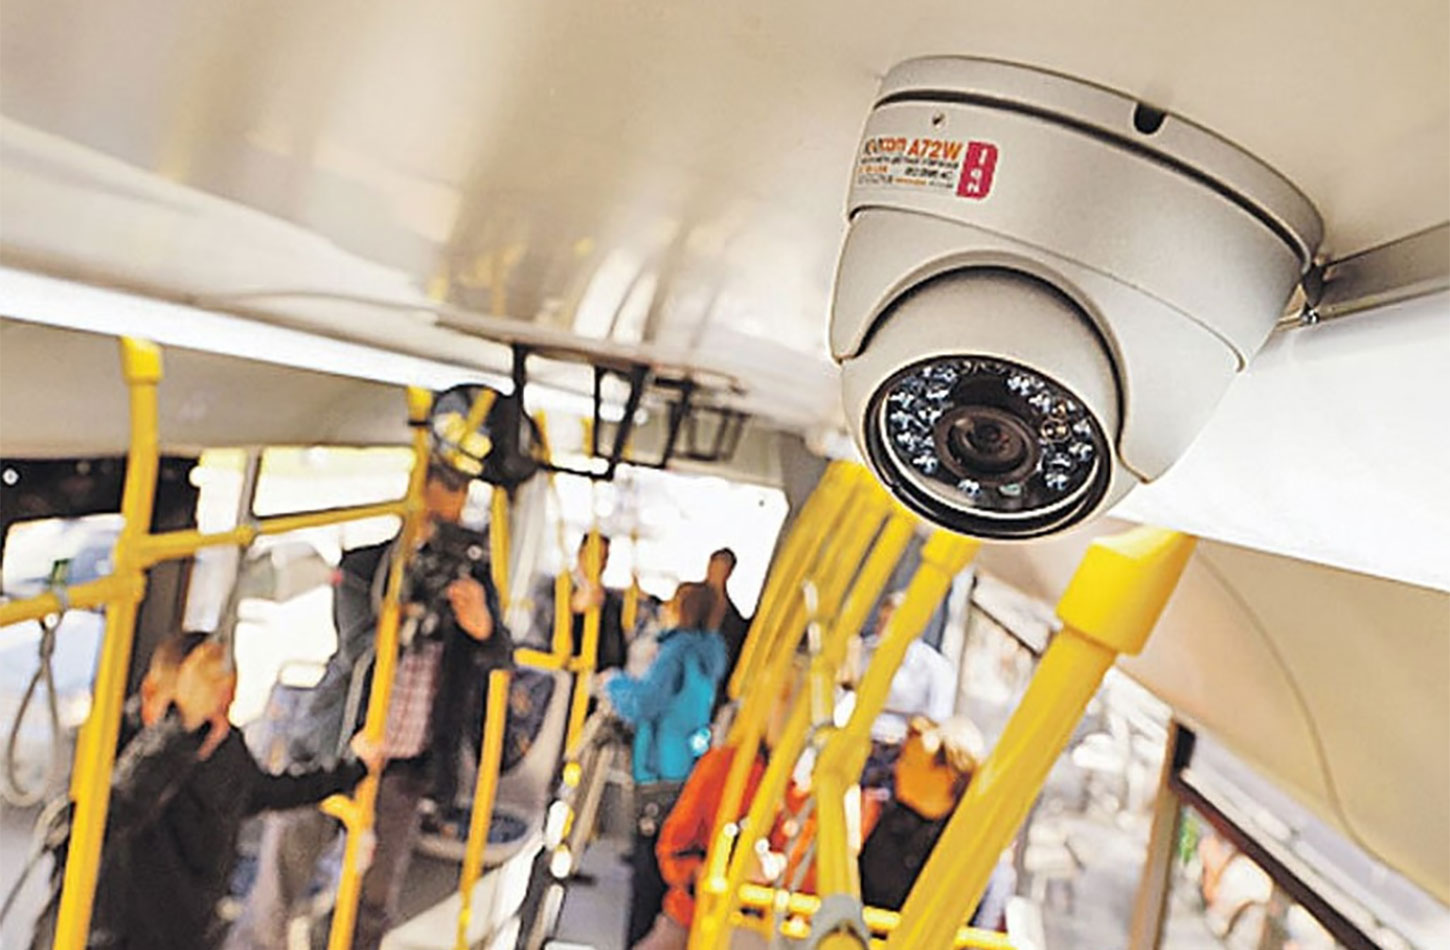 Conota camera. Видеонаблюдение на транспорте. Видеонаблюдение в автобусе. Видеокамера в автобусе. Камеры наблюдения в автобусе.